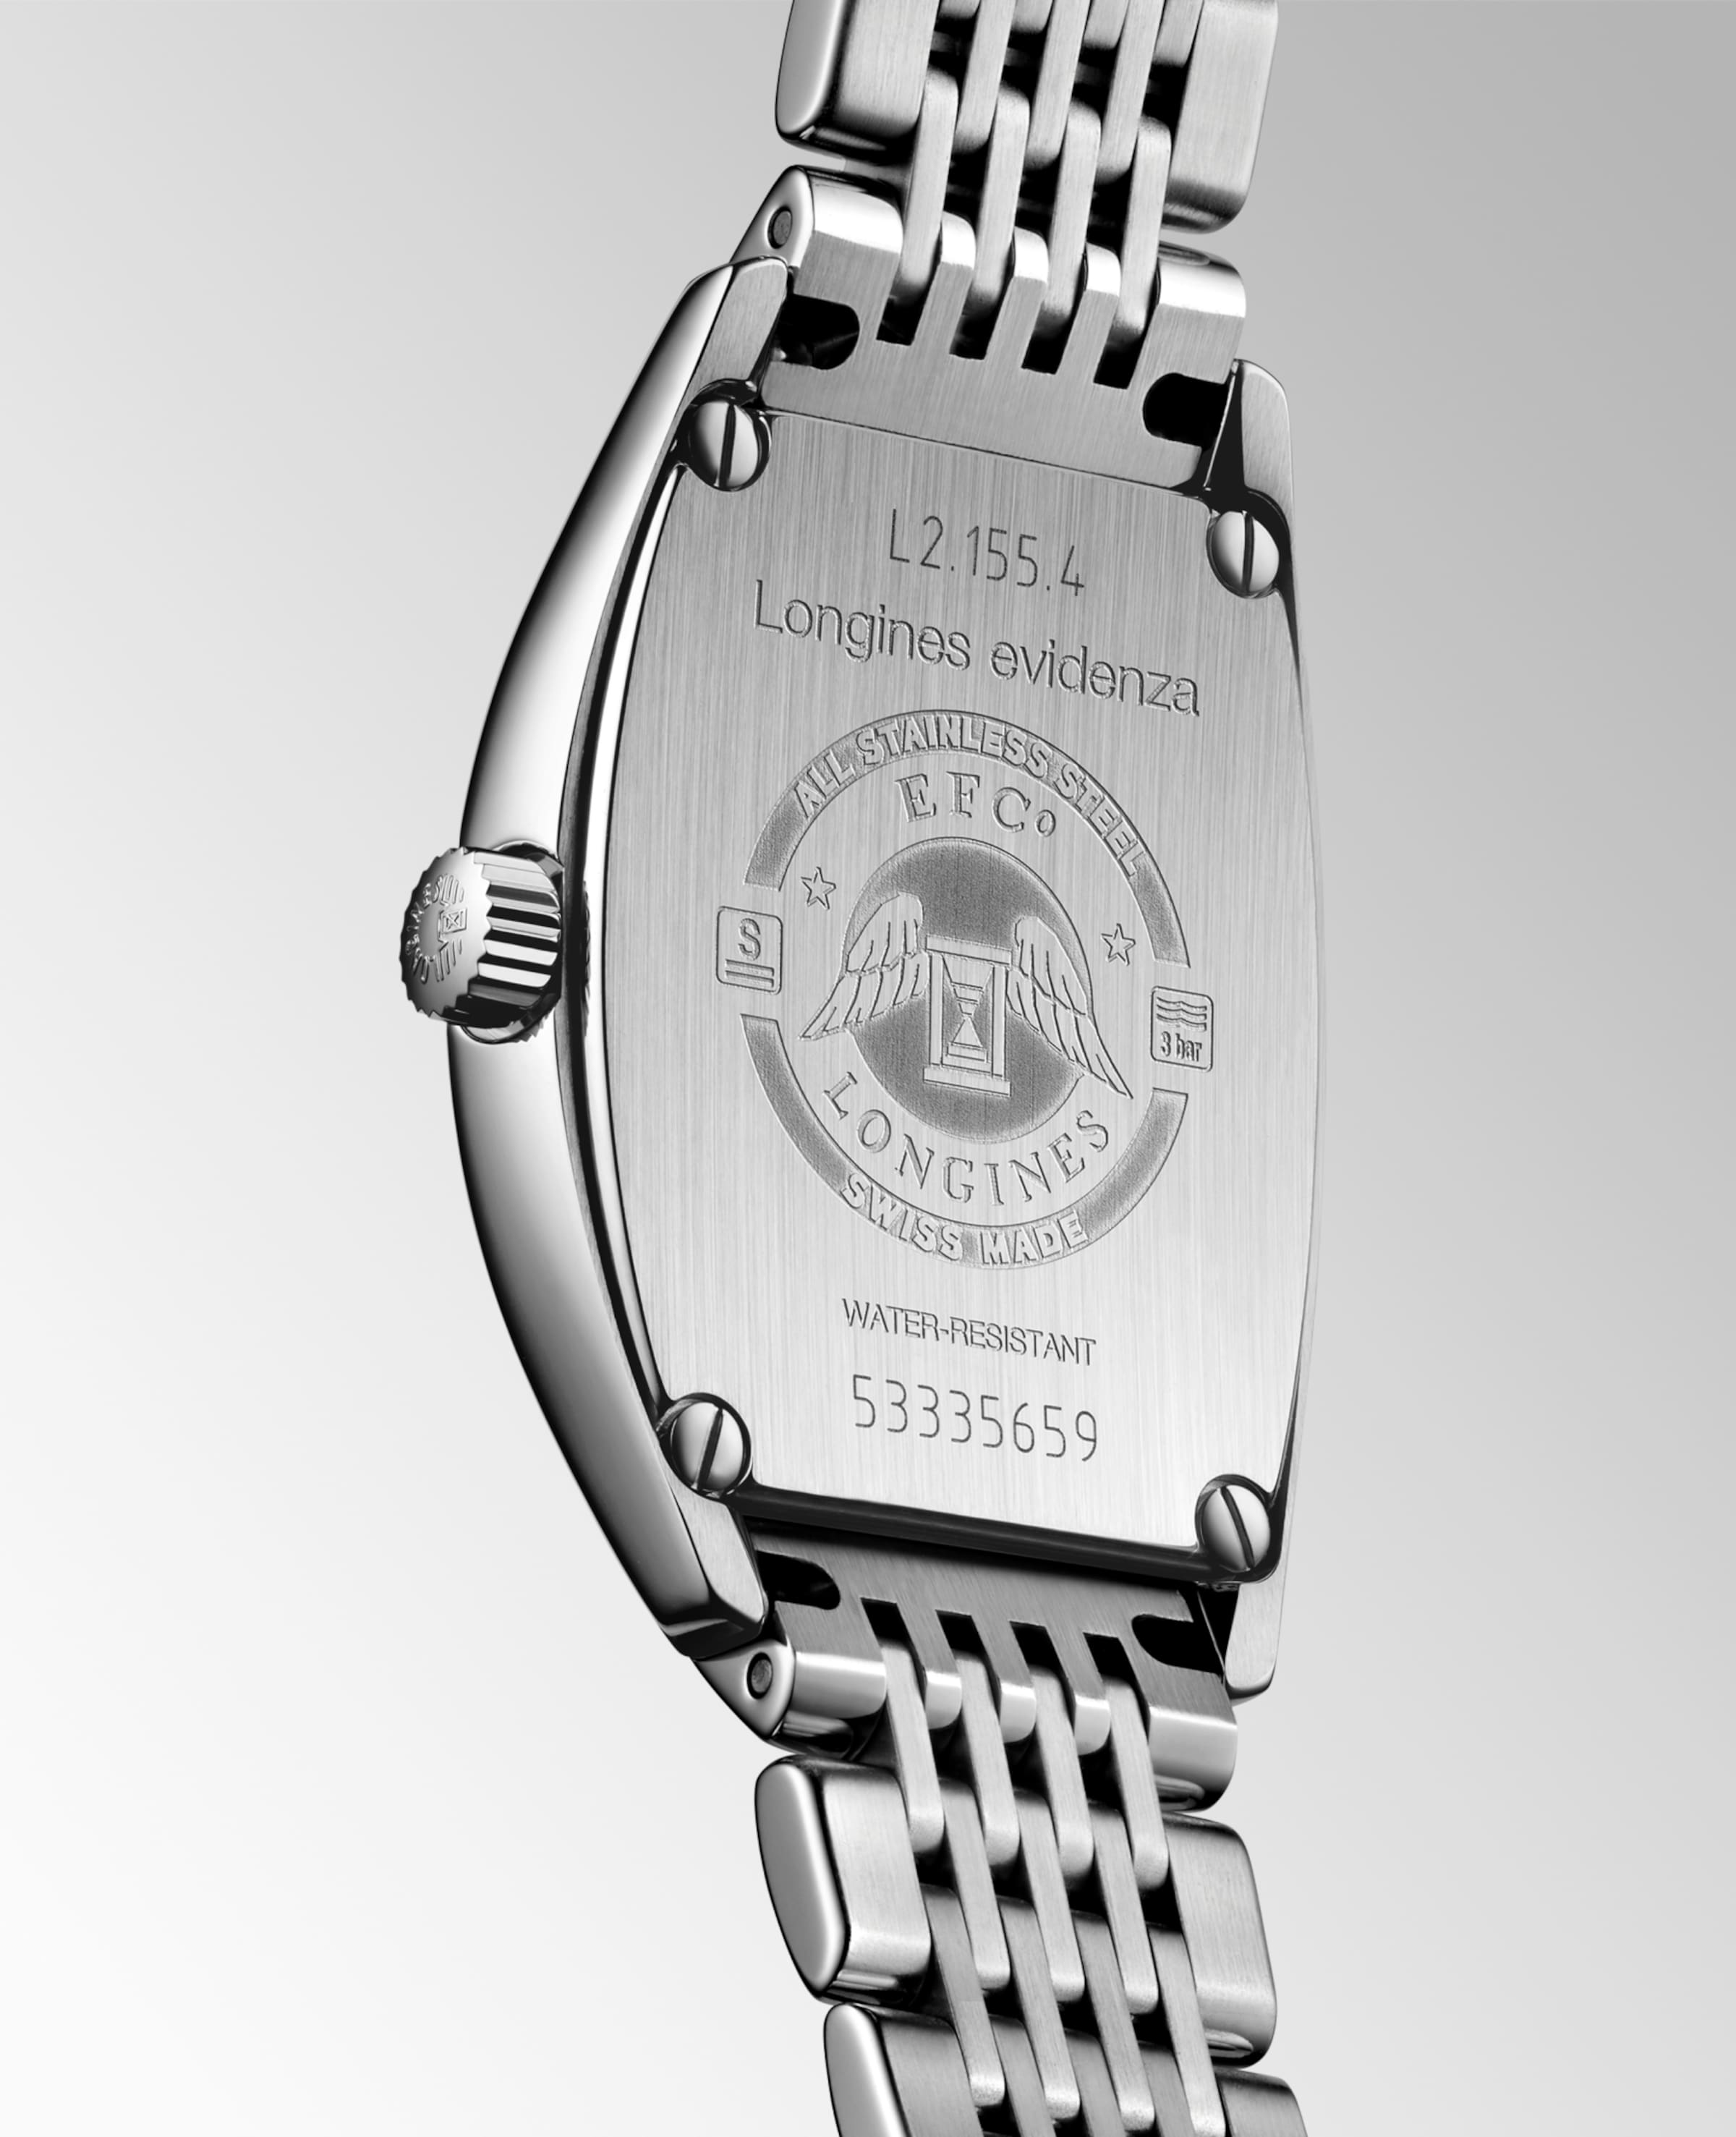 Longines EVIDENZA Quartz Stainless steel Watch - L2.155.4.71.6